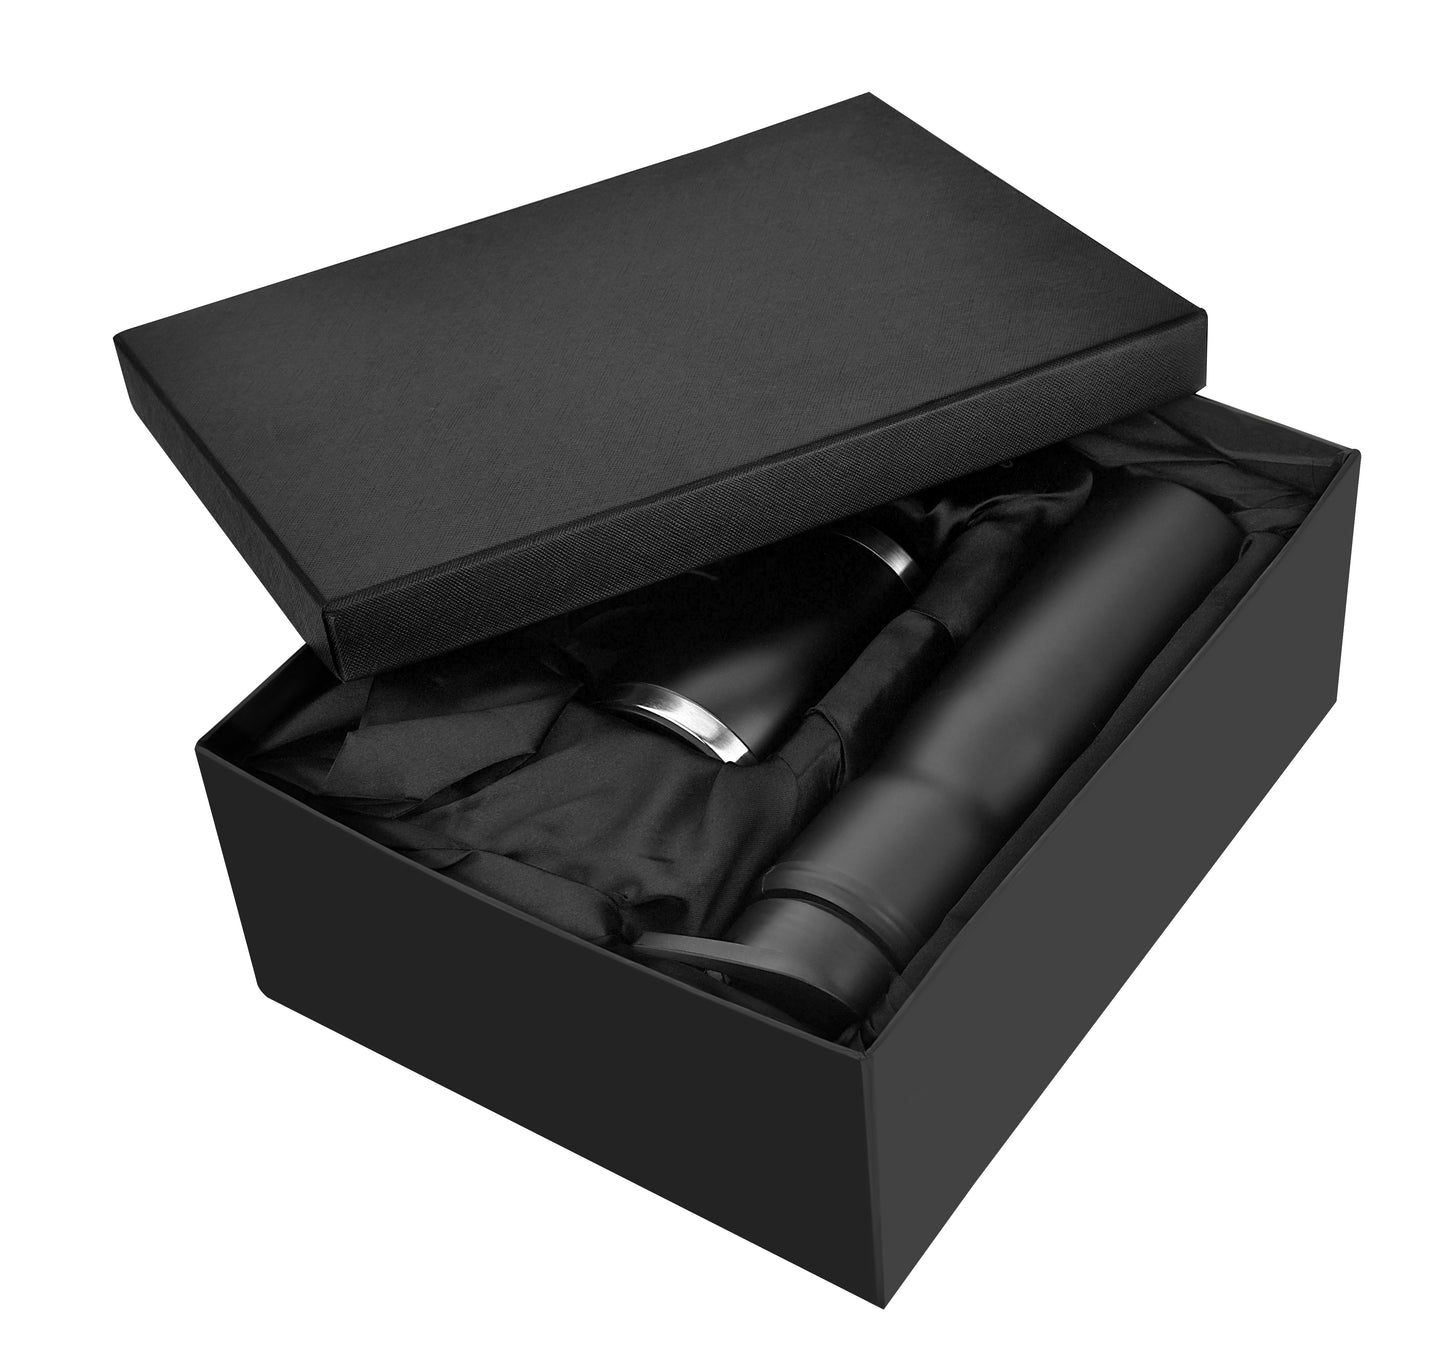 Black 6in1 Combo Gift Set Bottle, Mug, Pen, Keychain, Notebook, and Cardholder - For Employee Joining Kit, Corporate, Client or Dealer Gifting JK49